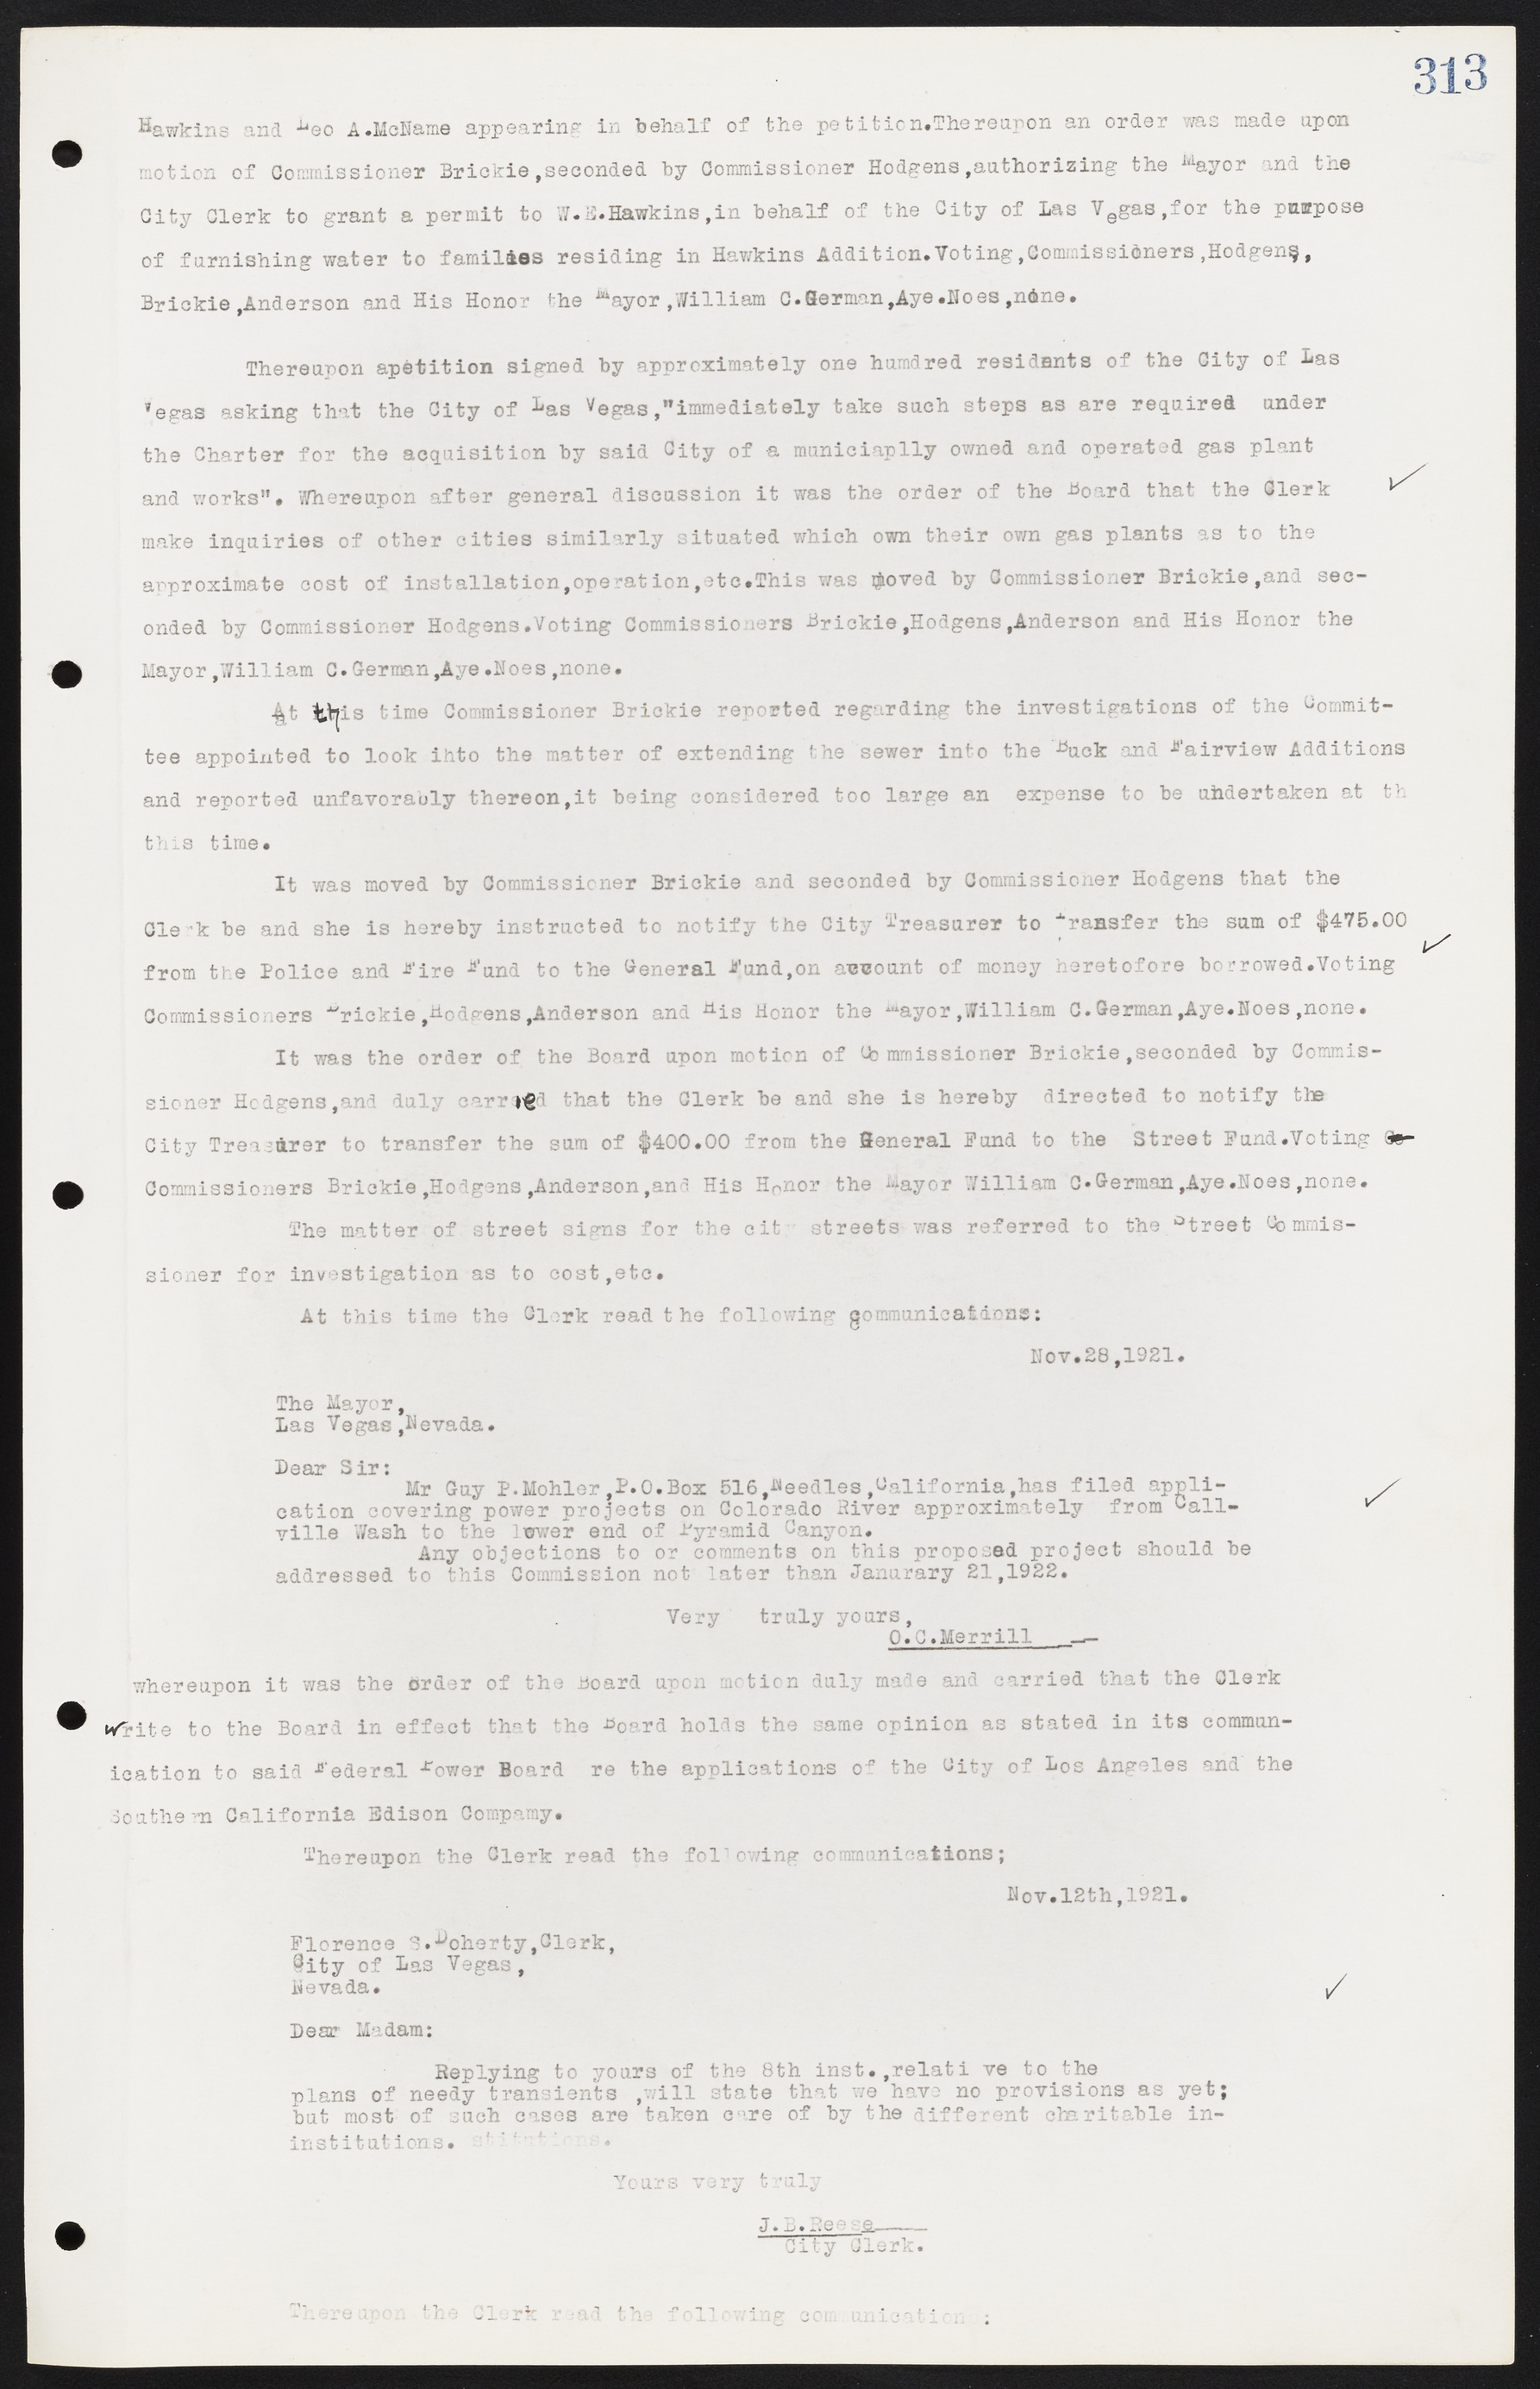 Las Vegas City Commission Minutes, June 22, 1911 to February 7, 1922, lvc000001-329